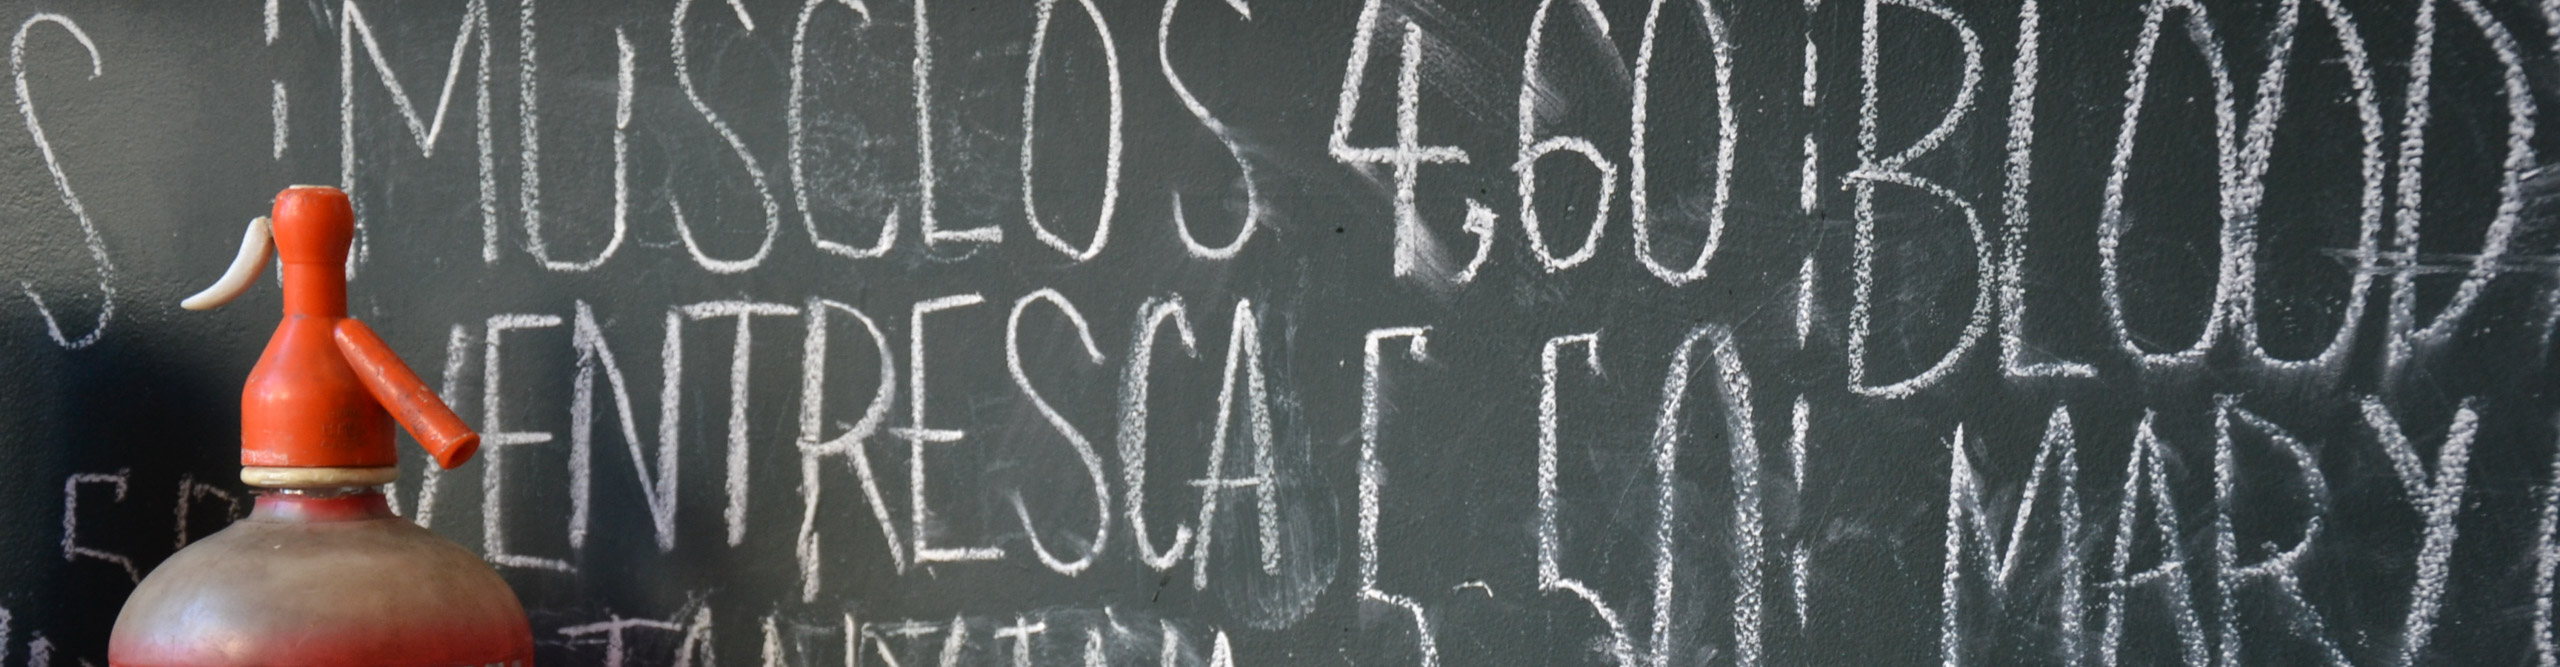 Spanish phrases written on a blackboard 